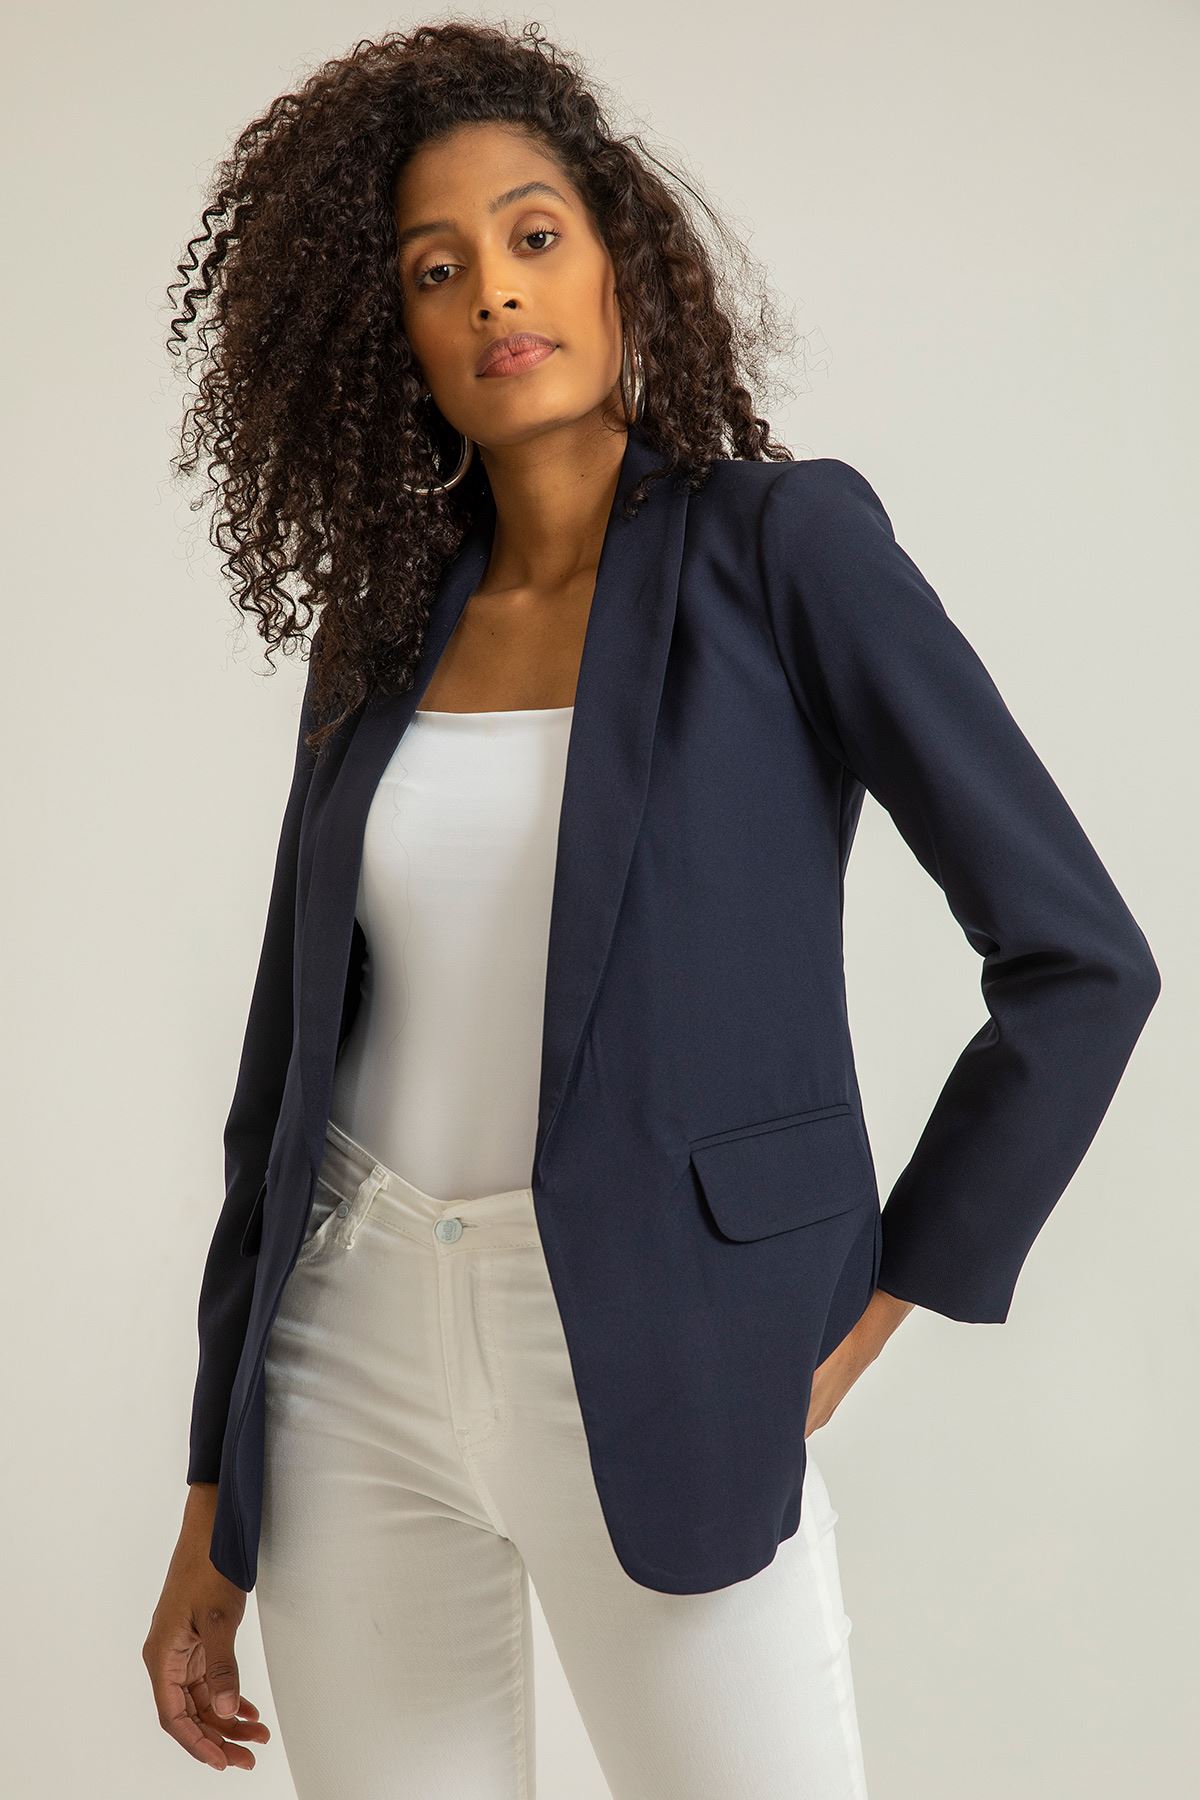 Atlas Fabric Long Sleeve Shawl Collar Below Hip Classical Women Jacket - Navy Blue 